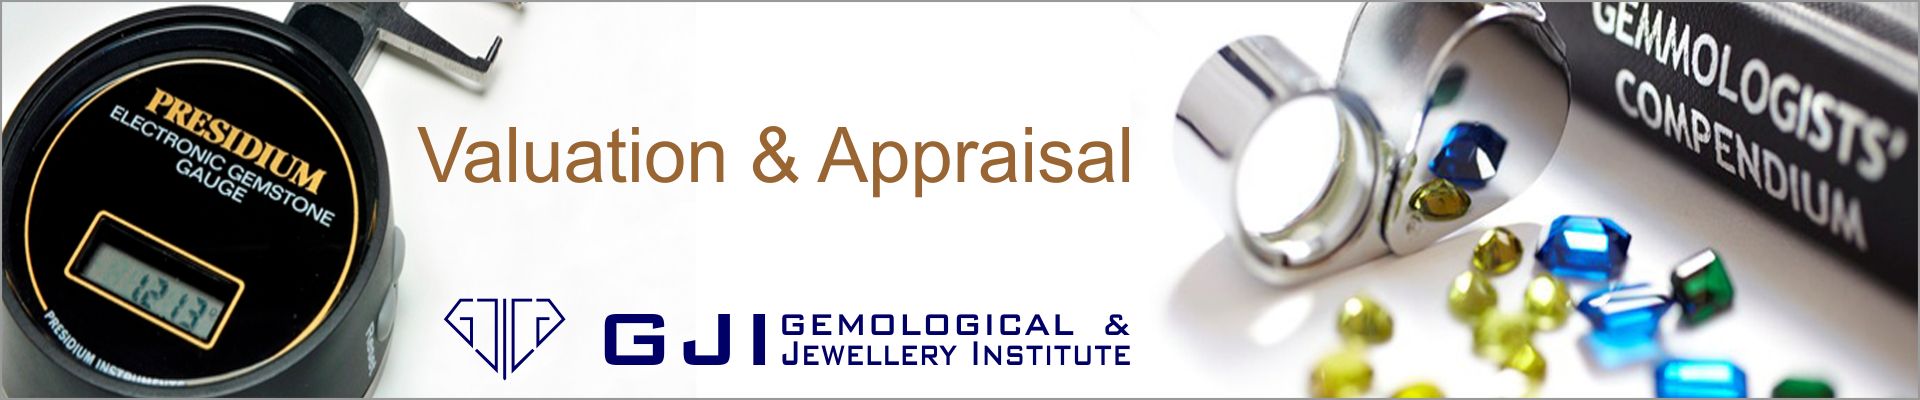 jewellery appraisal diamond certification